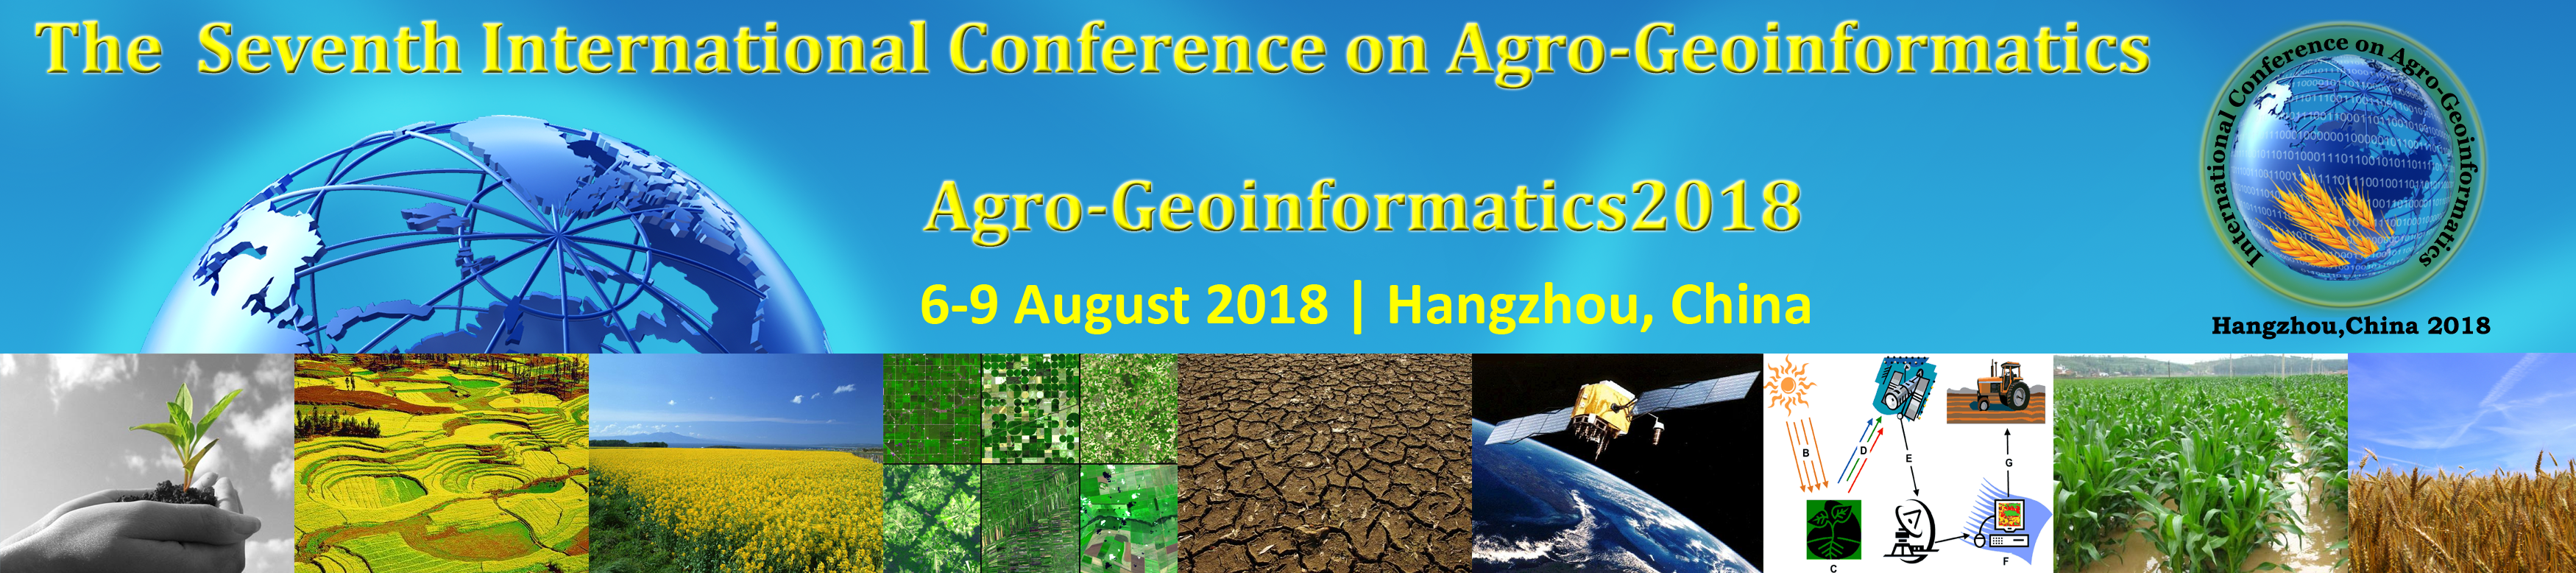 Agro-Geoinformatics 2018